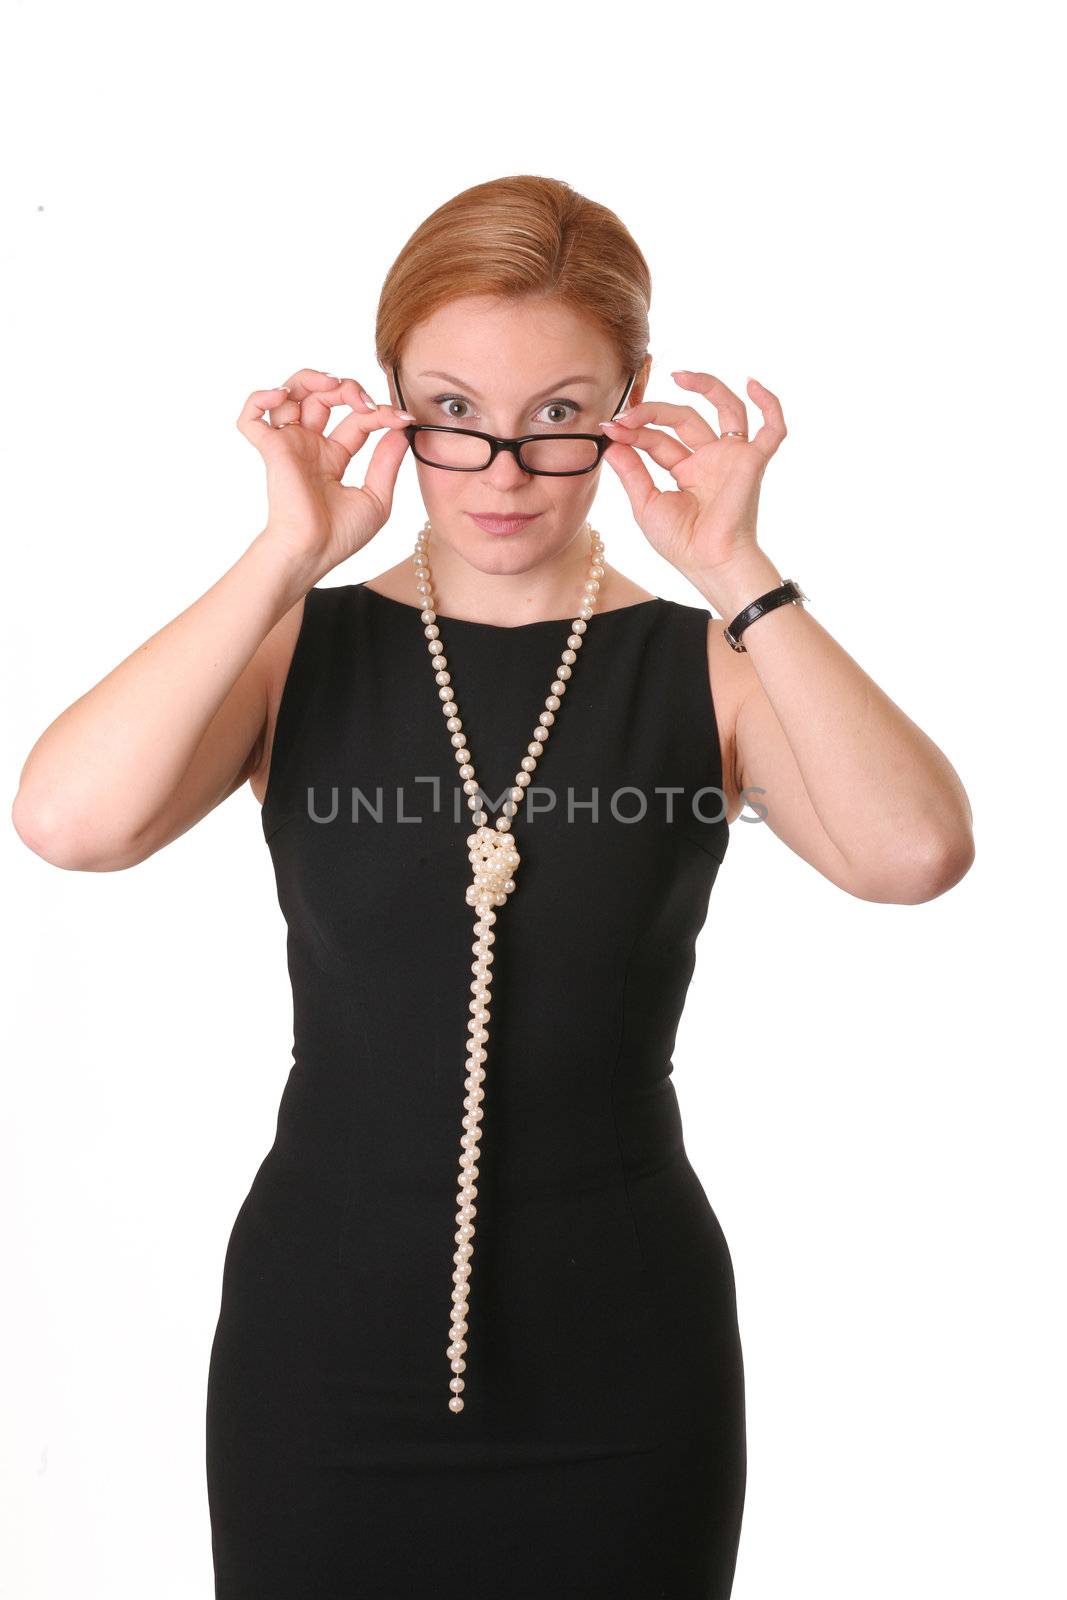 Surprised woman in glasses by lipik